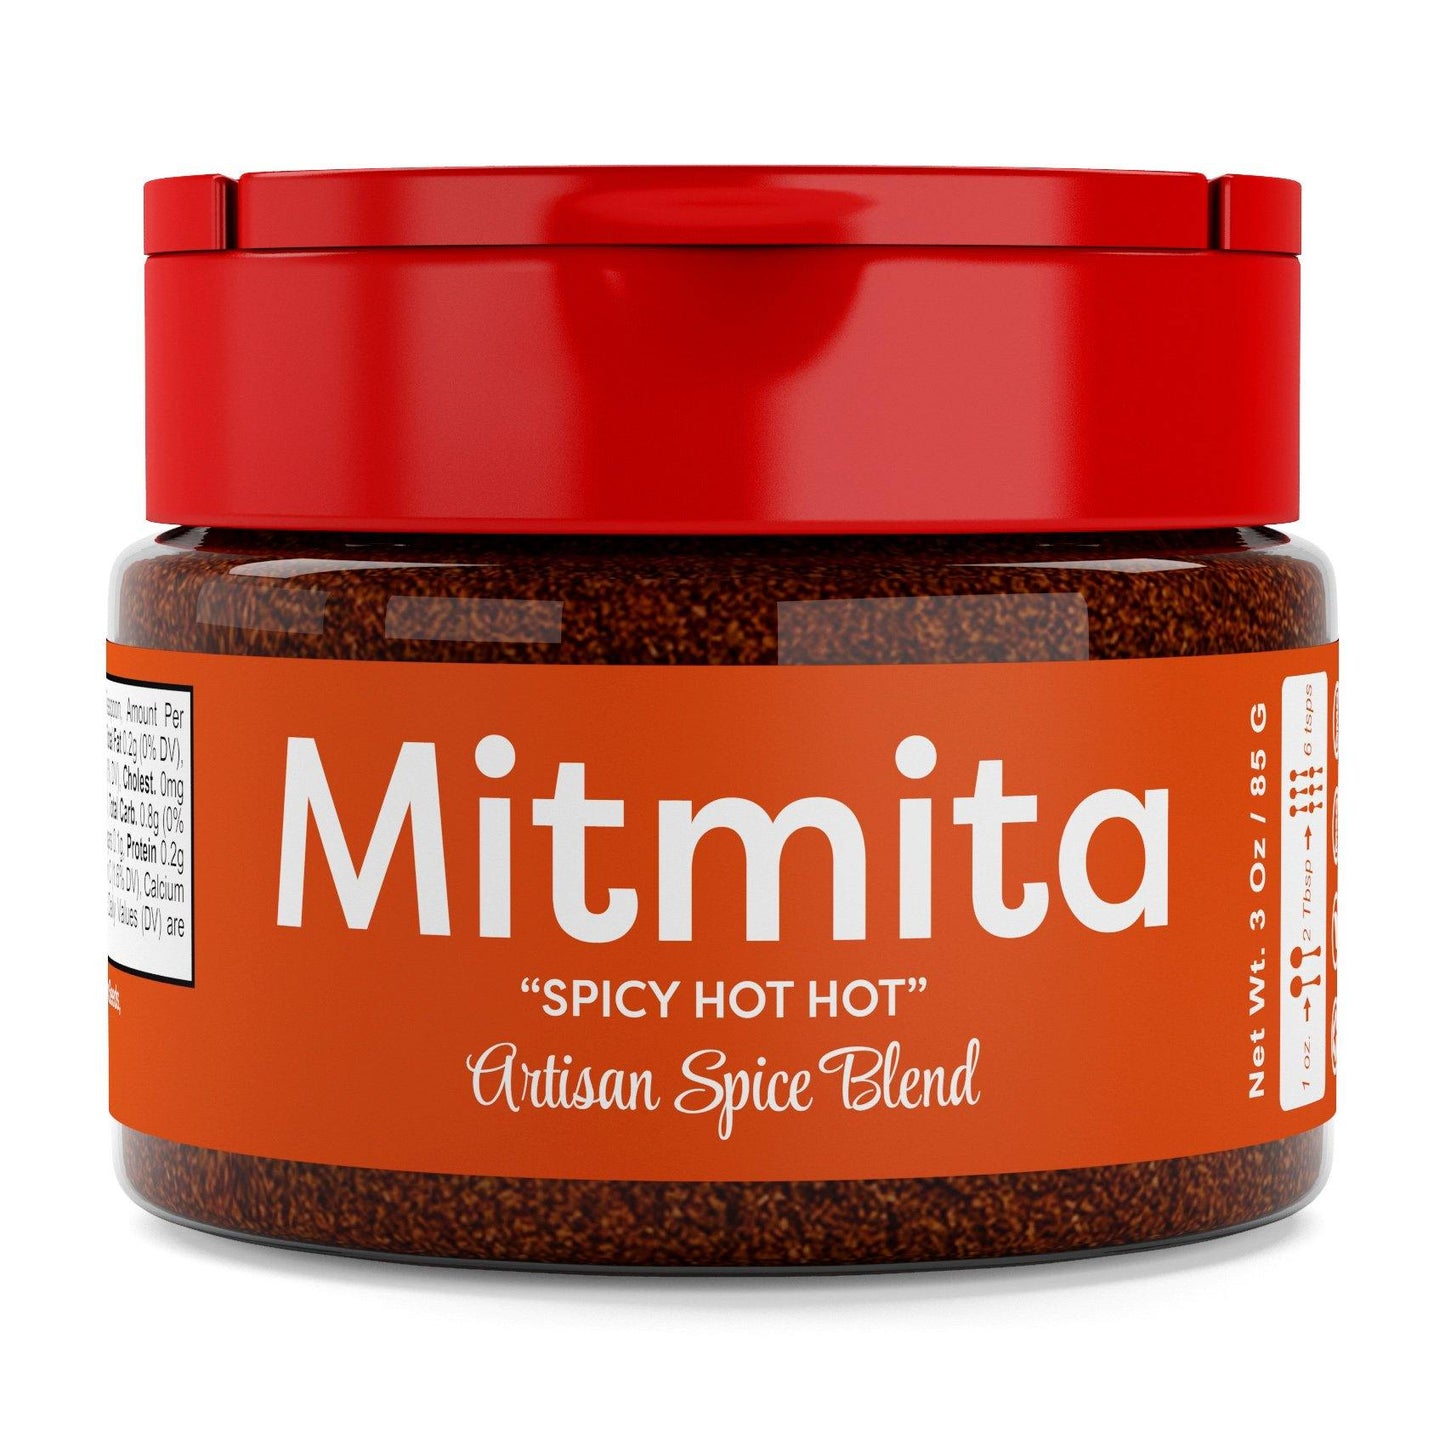 Mitmita Spice - USimplySeason